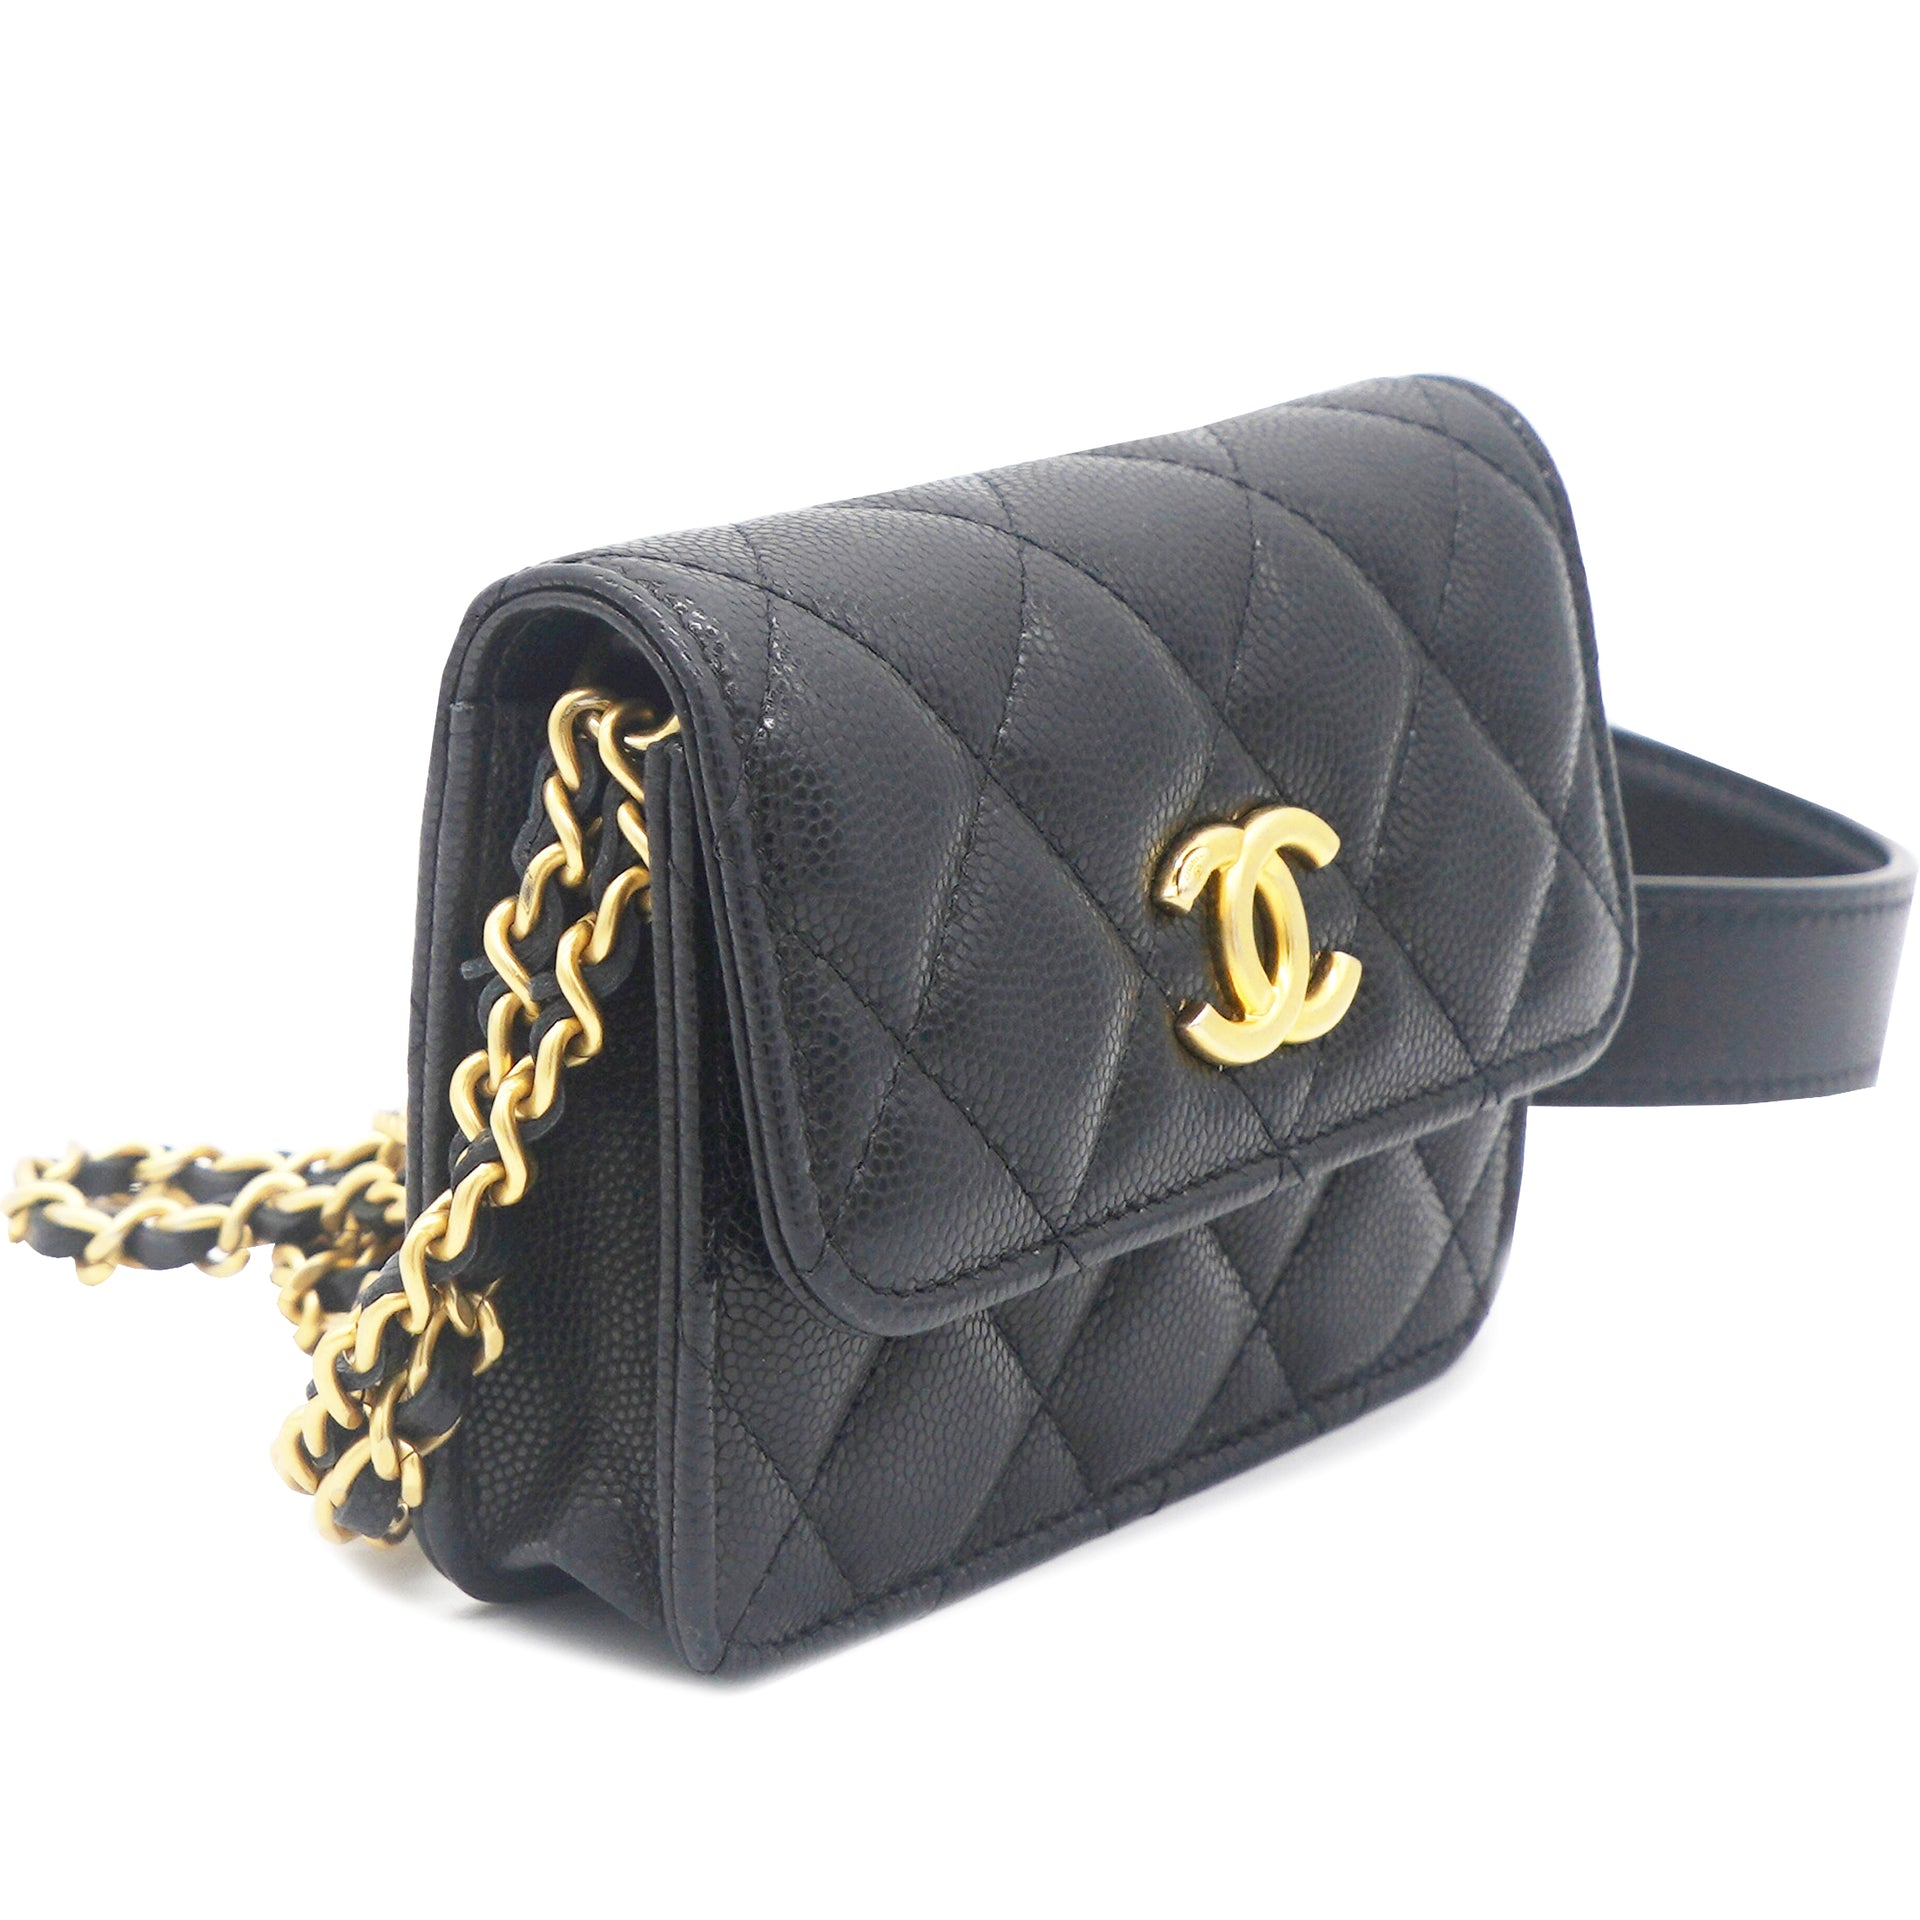 CHANEL Mini matelasse chain shoulder bag Caviar skin Black/Gold